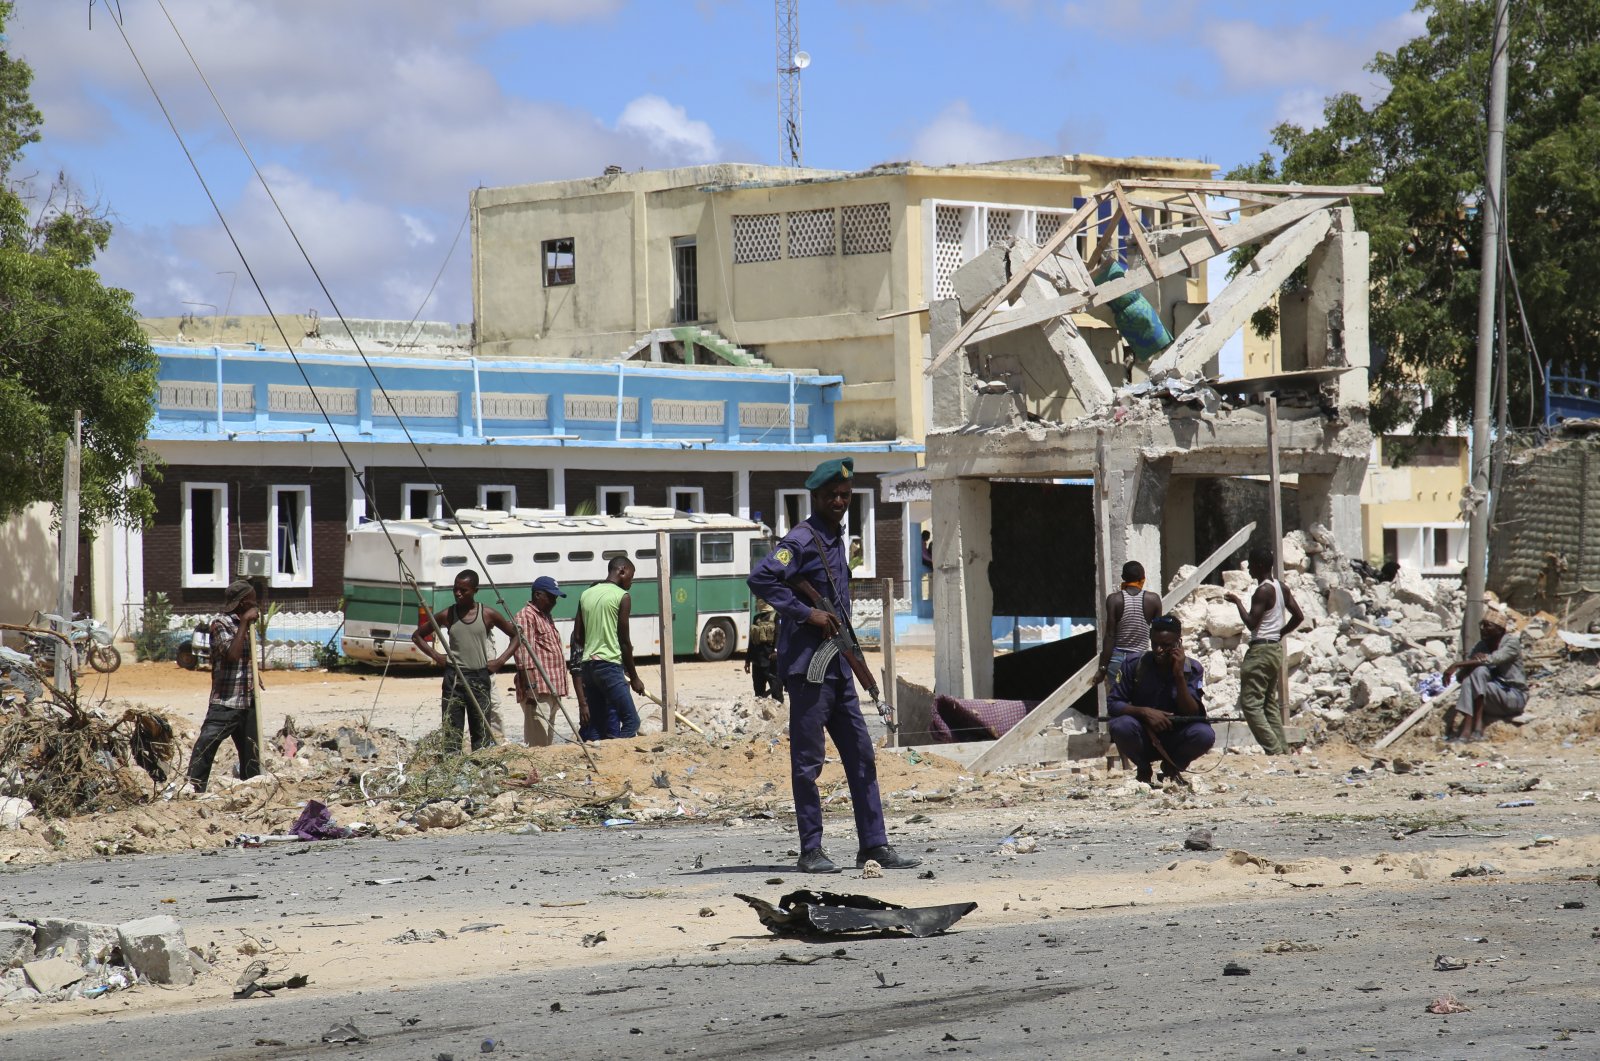 Ledakan pasar tewaskan sedikitnya 8 orang, lukai 13 orang di dekat Mogadishu Somalia